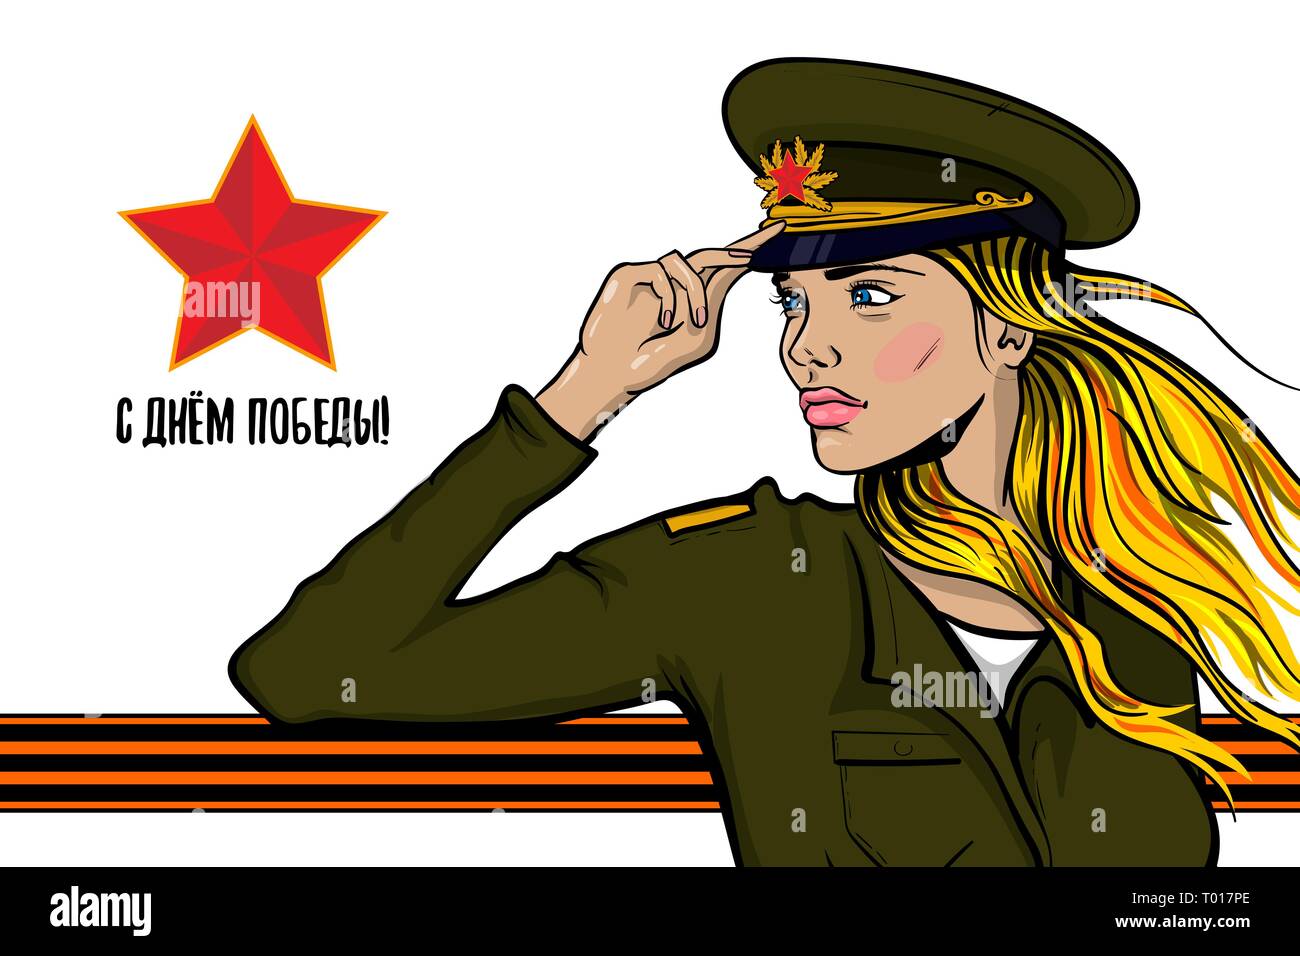 9. Mai große Krieg Sieg Veteranen Speicherkarte. Porträt junger Soldat blonde Frau Pop Art in grün Infanterie camouflage Uniform. Futter-cap sowjetischen Unio Stock Vektor